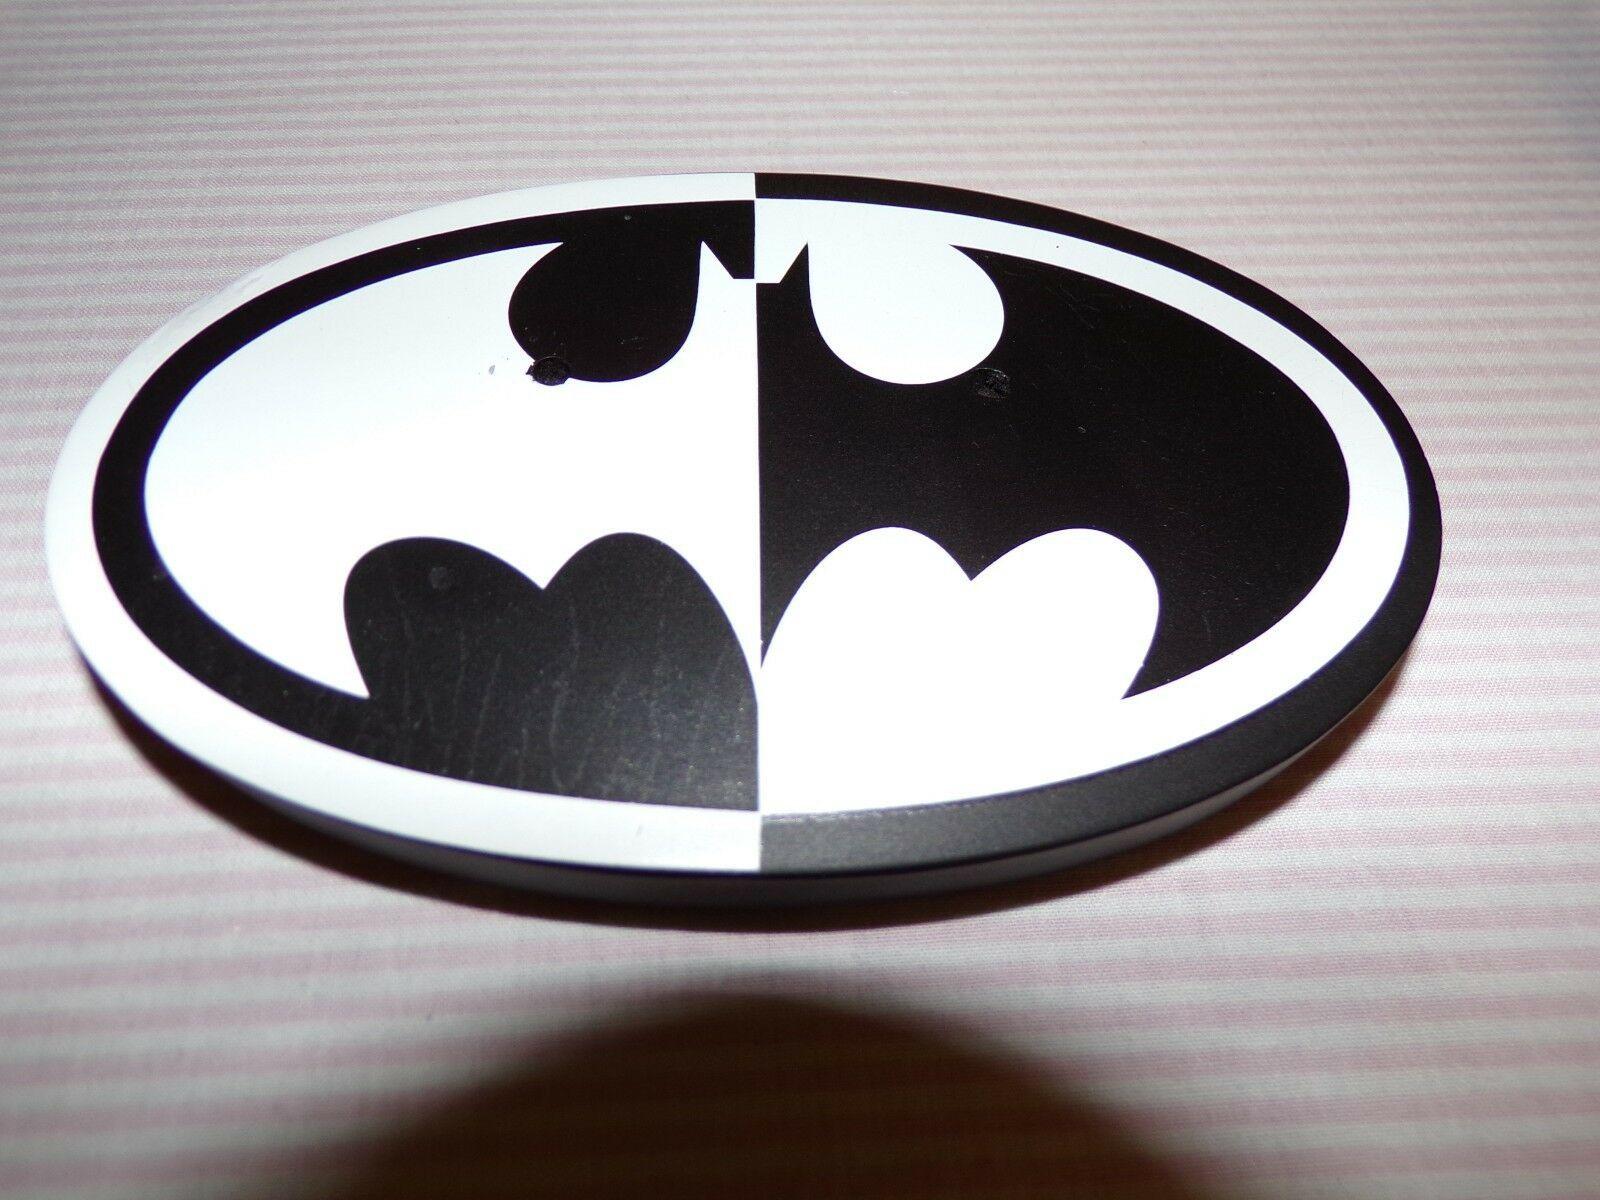 Batman Black and White Circle Logo - Batman Black and White kelley jones statue Second Edition | eBay